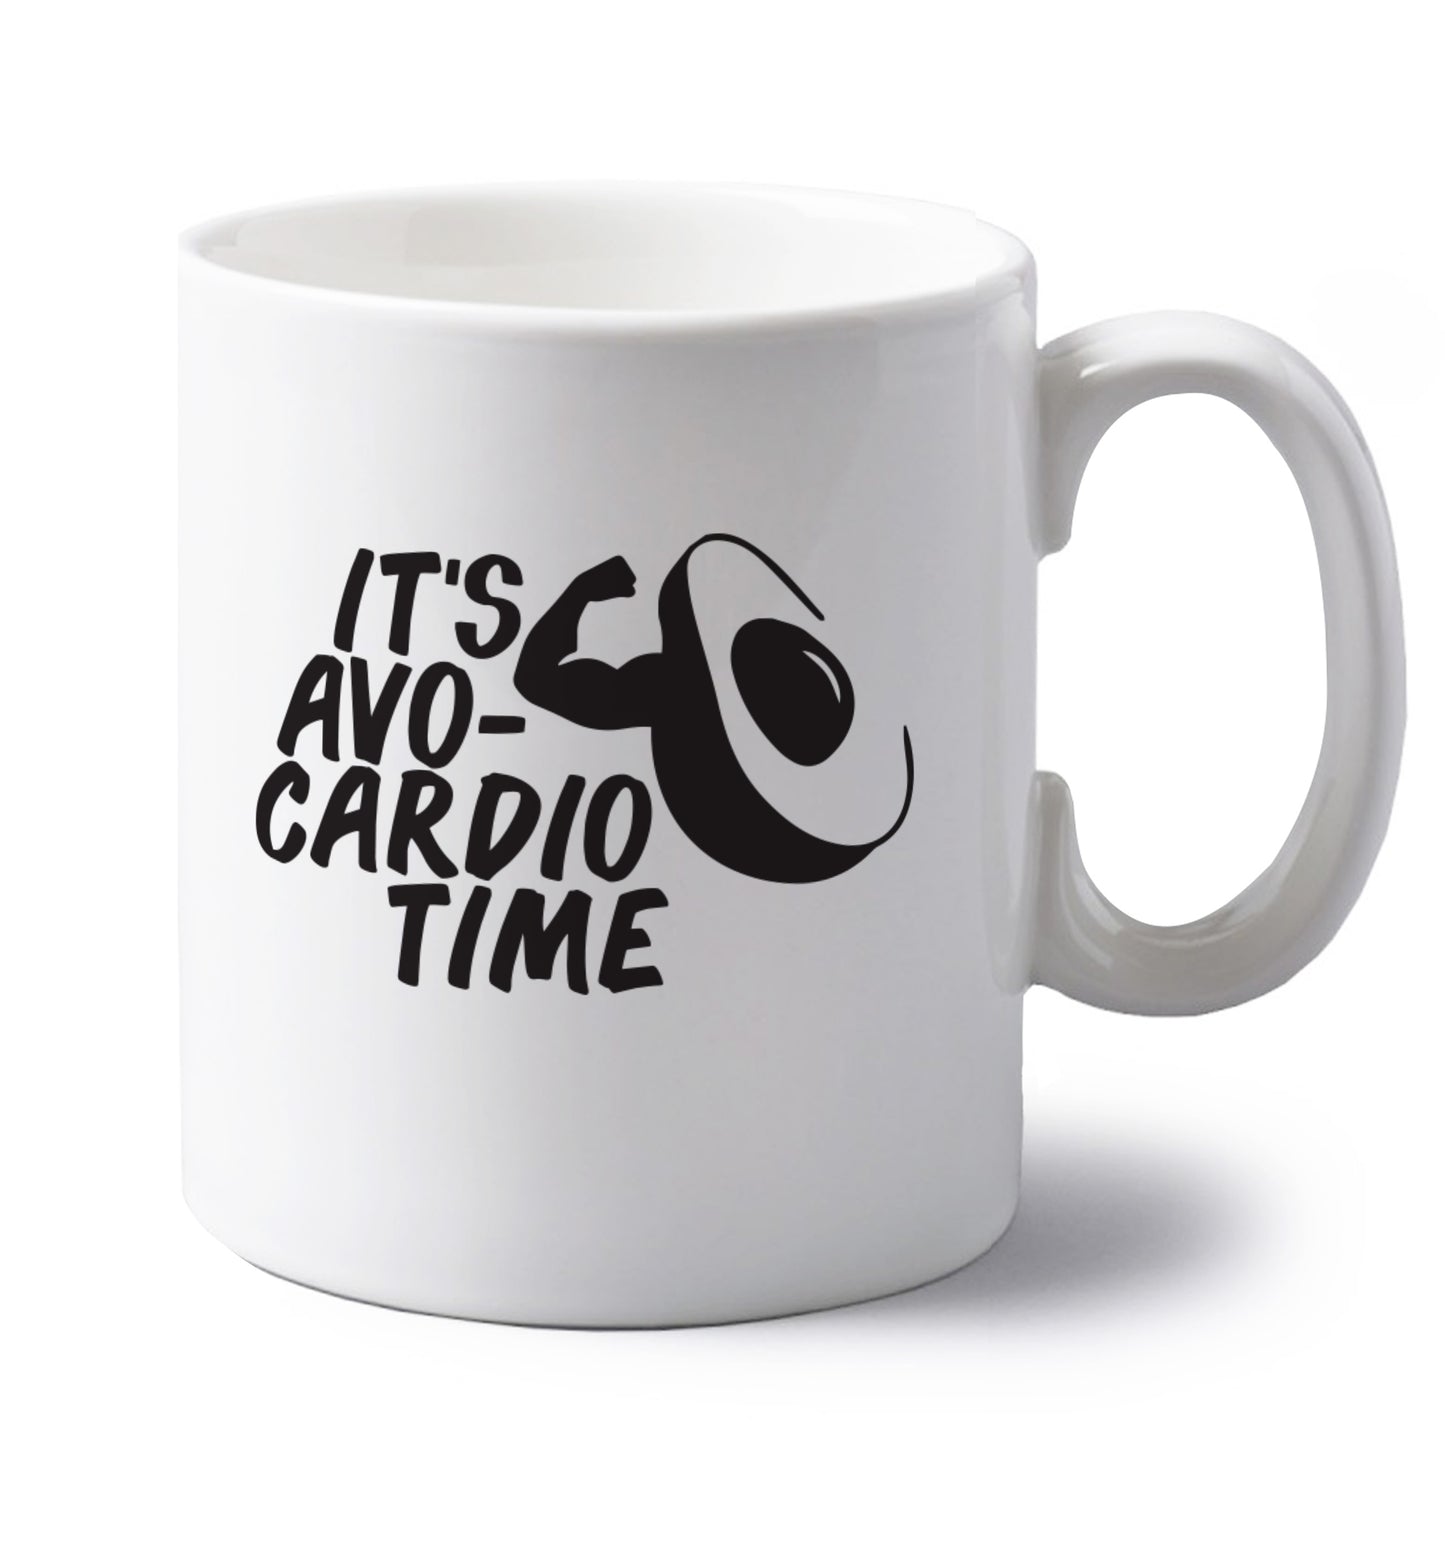 It's avo-cardio time left handed white ceramic mug 